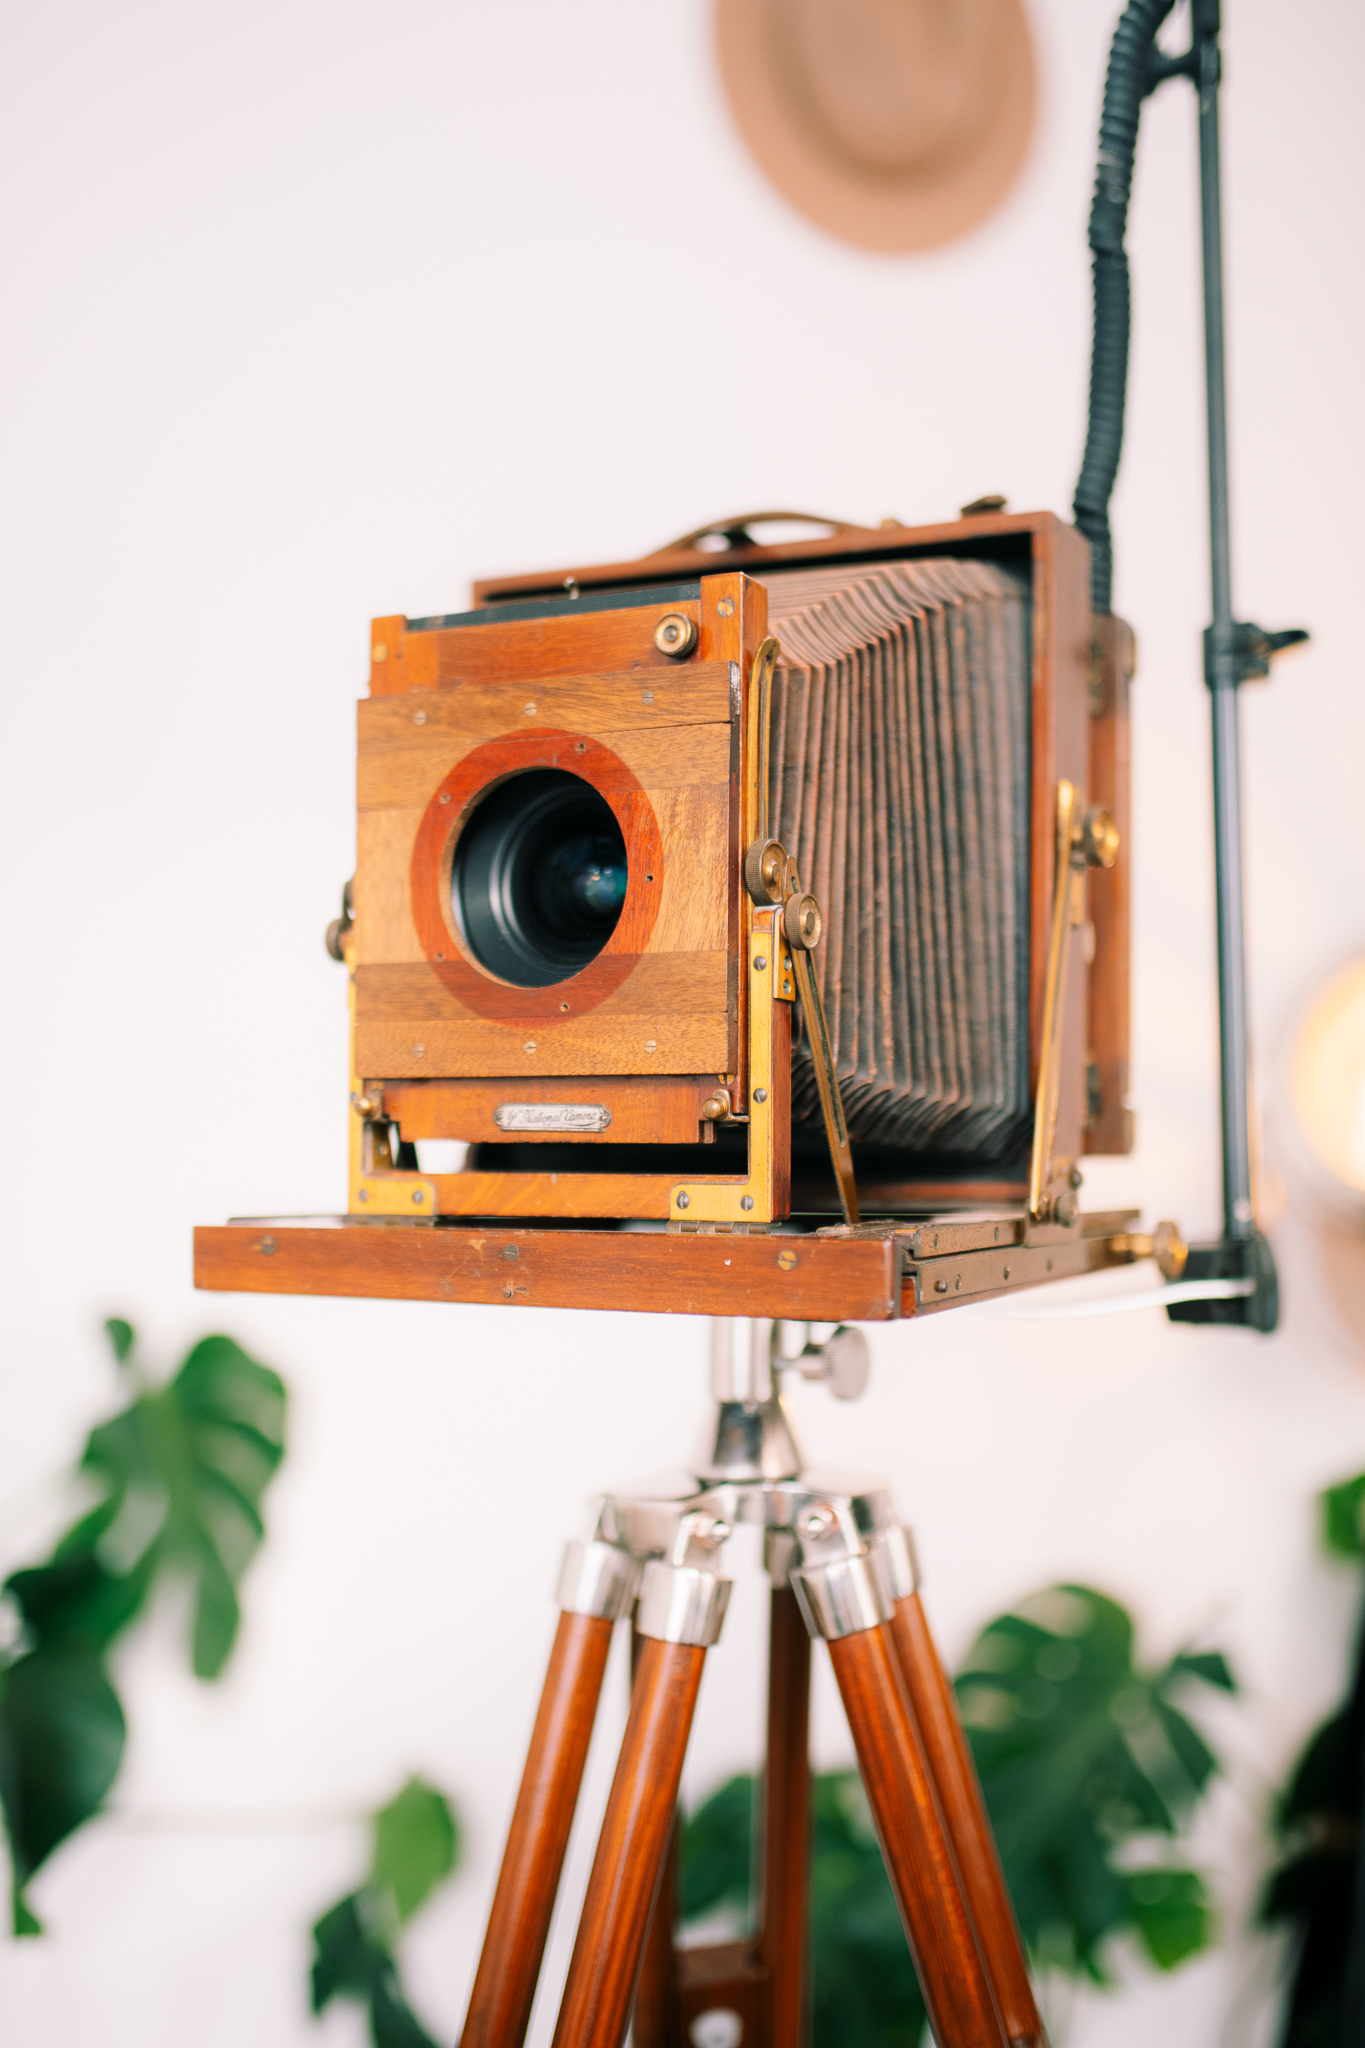 Vintage analog camera styled photobooth with a digital camera inside